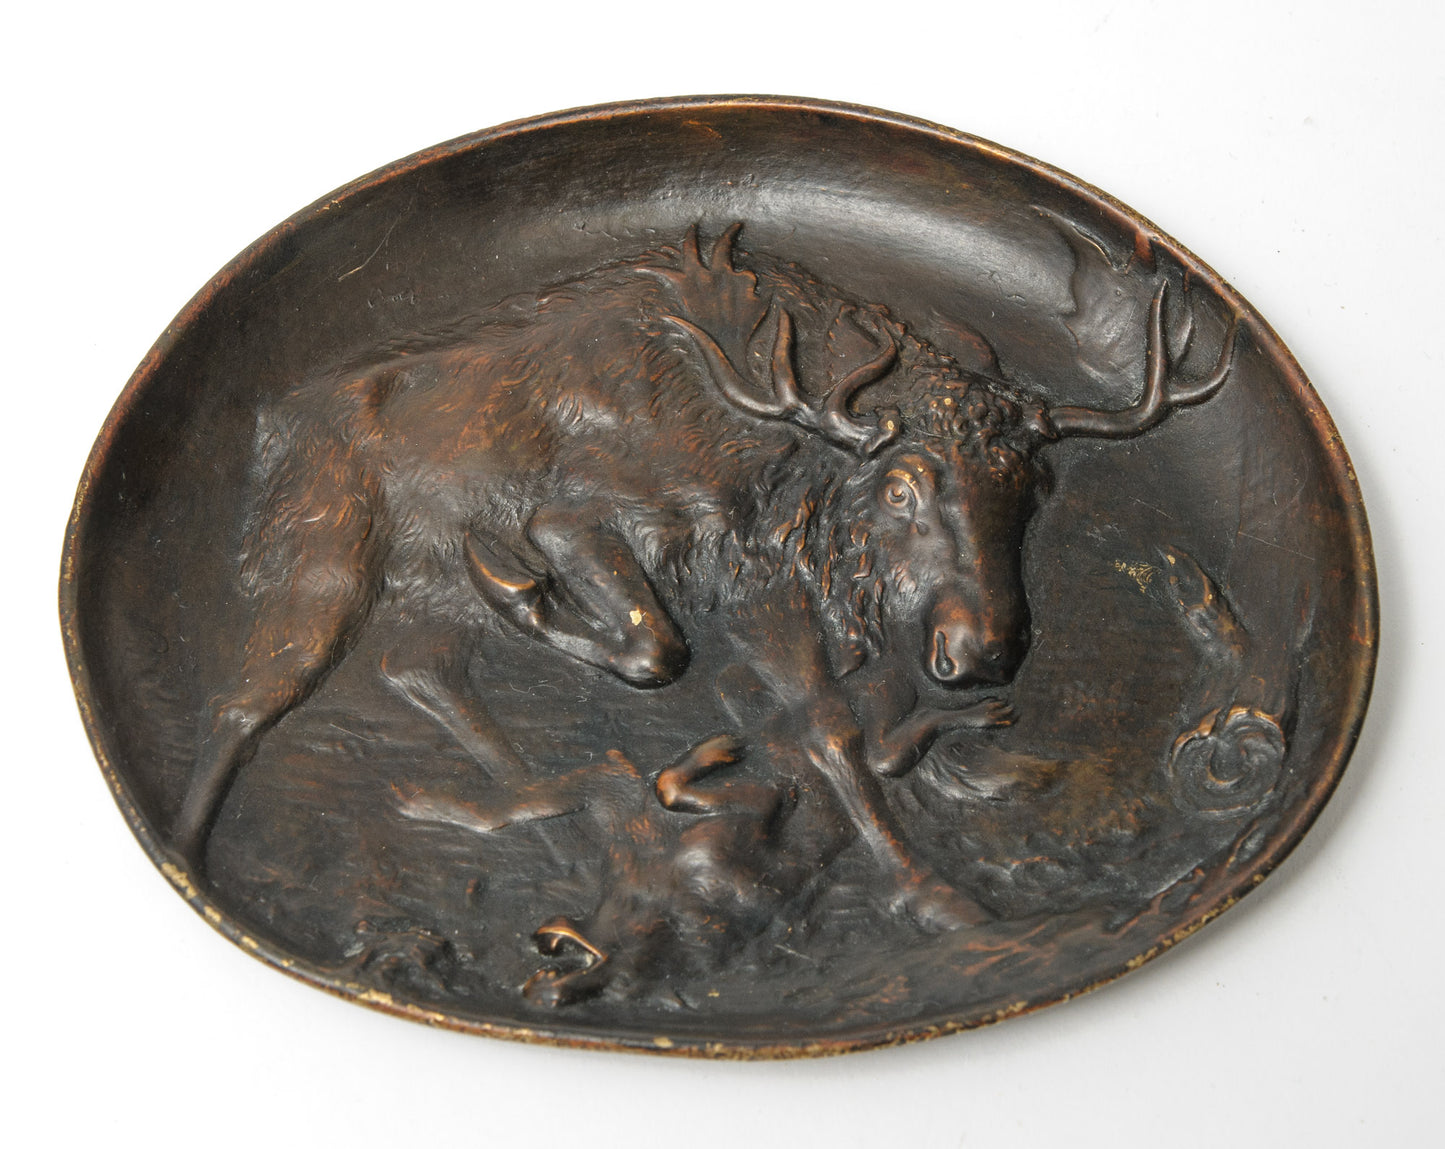 Antique Austrian Bronze Berndorf Vide Poche Dish - Moose Attacking Wolf c1890 (Code 1064)